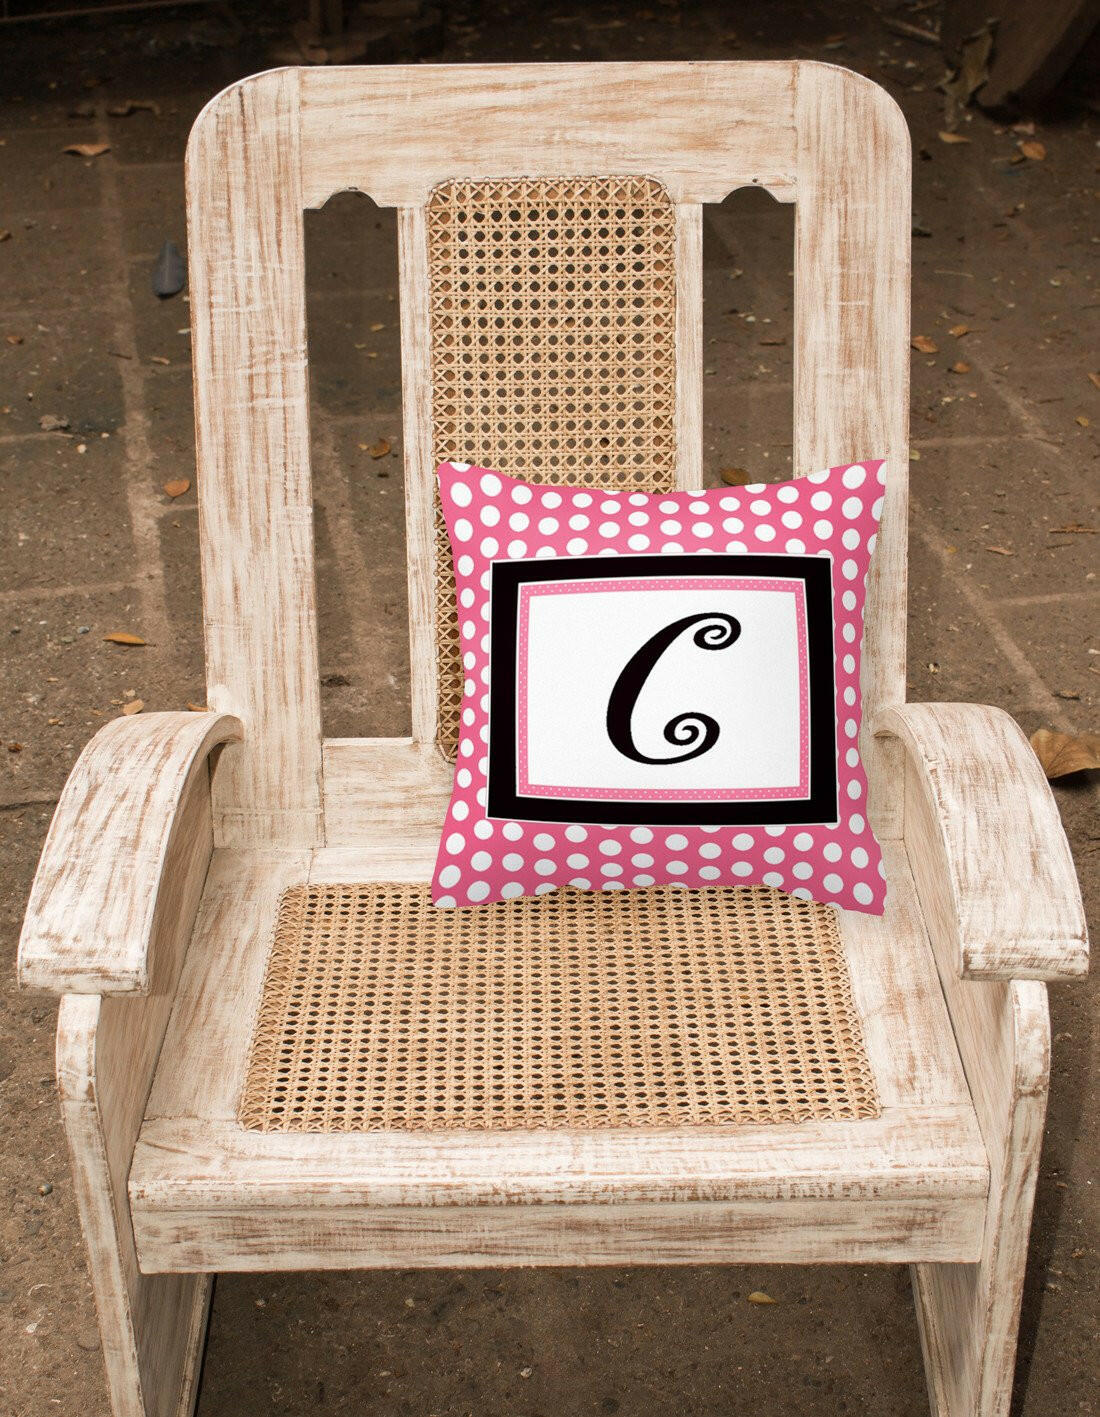 Monogram Initial C Pink Black Polka Dots Decorative Canvas Fabric Pillow CJ1001 - the-store.com